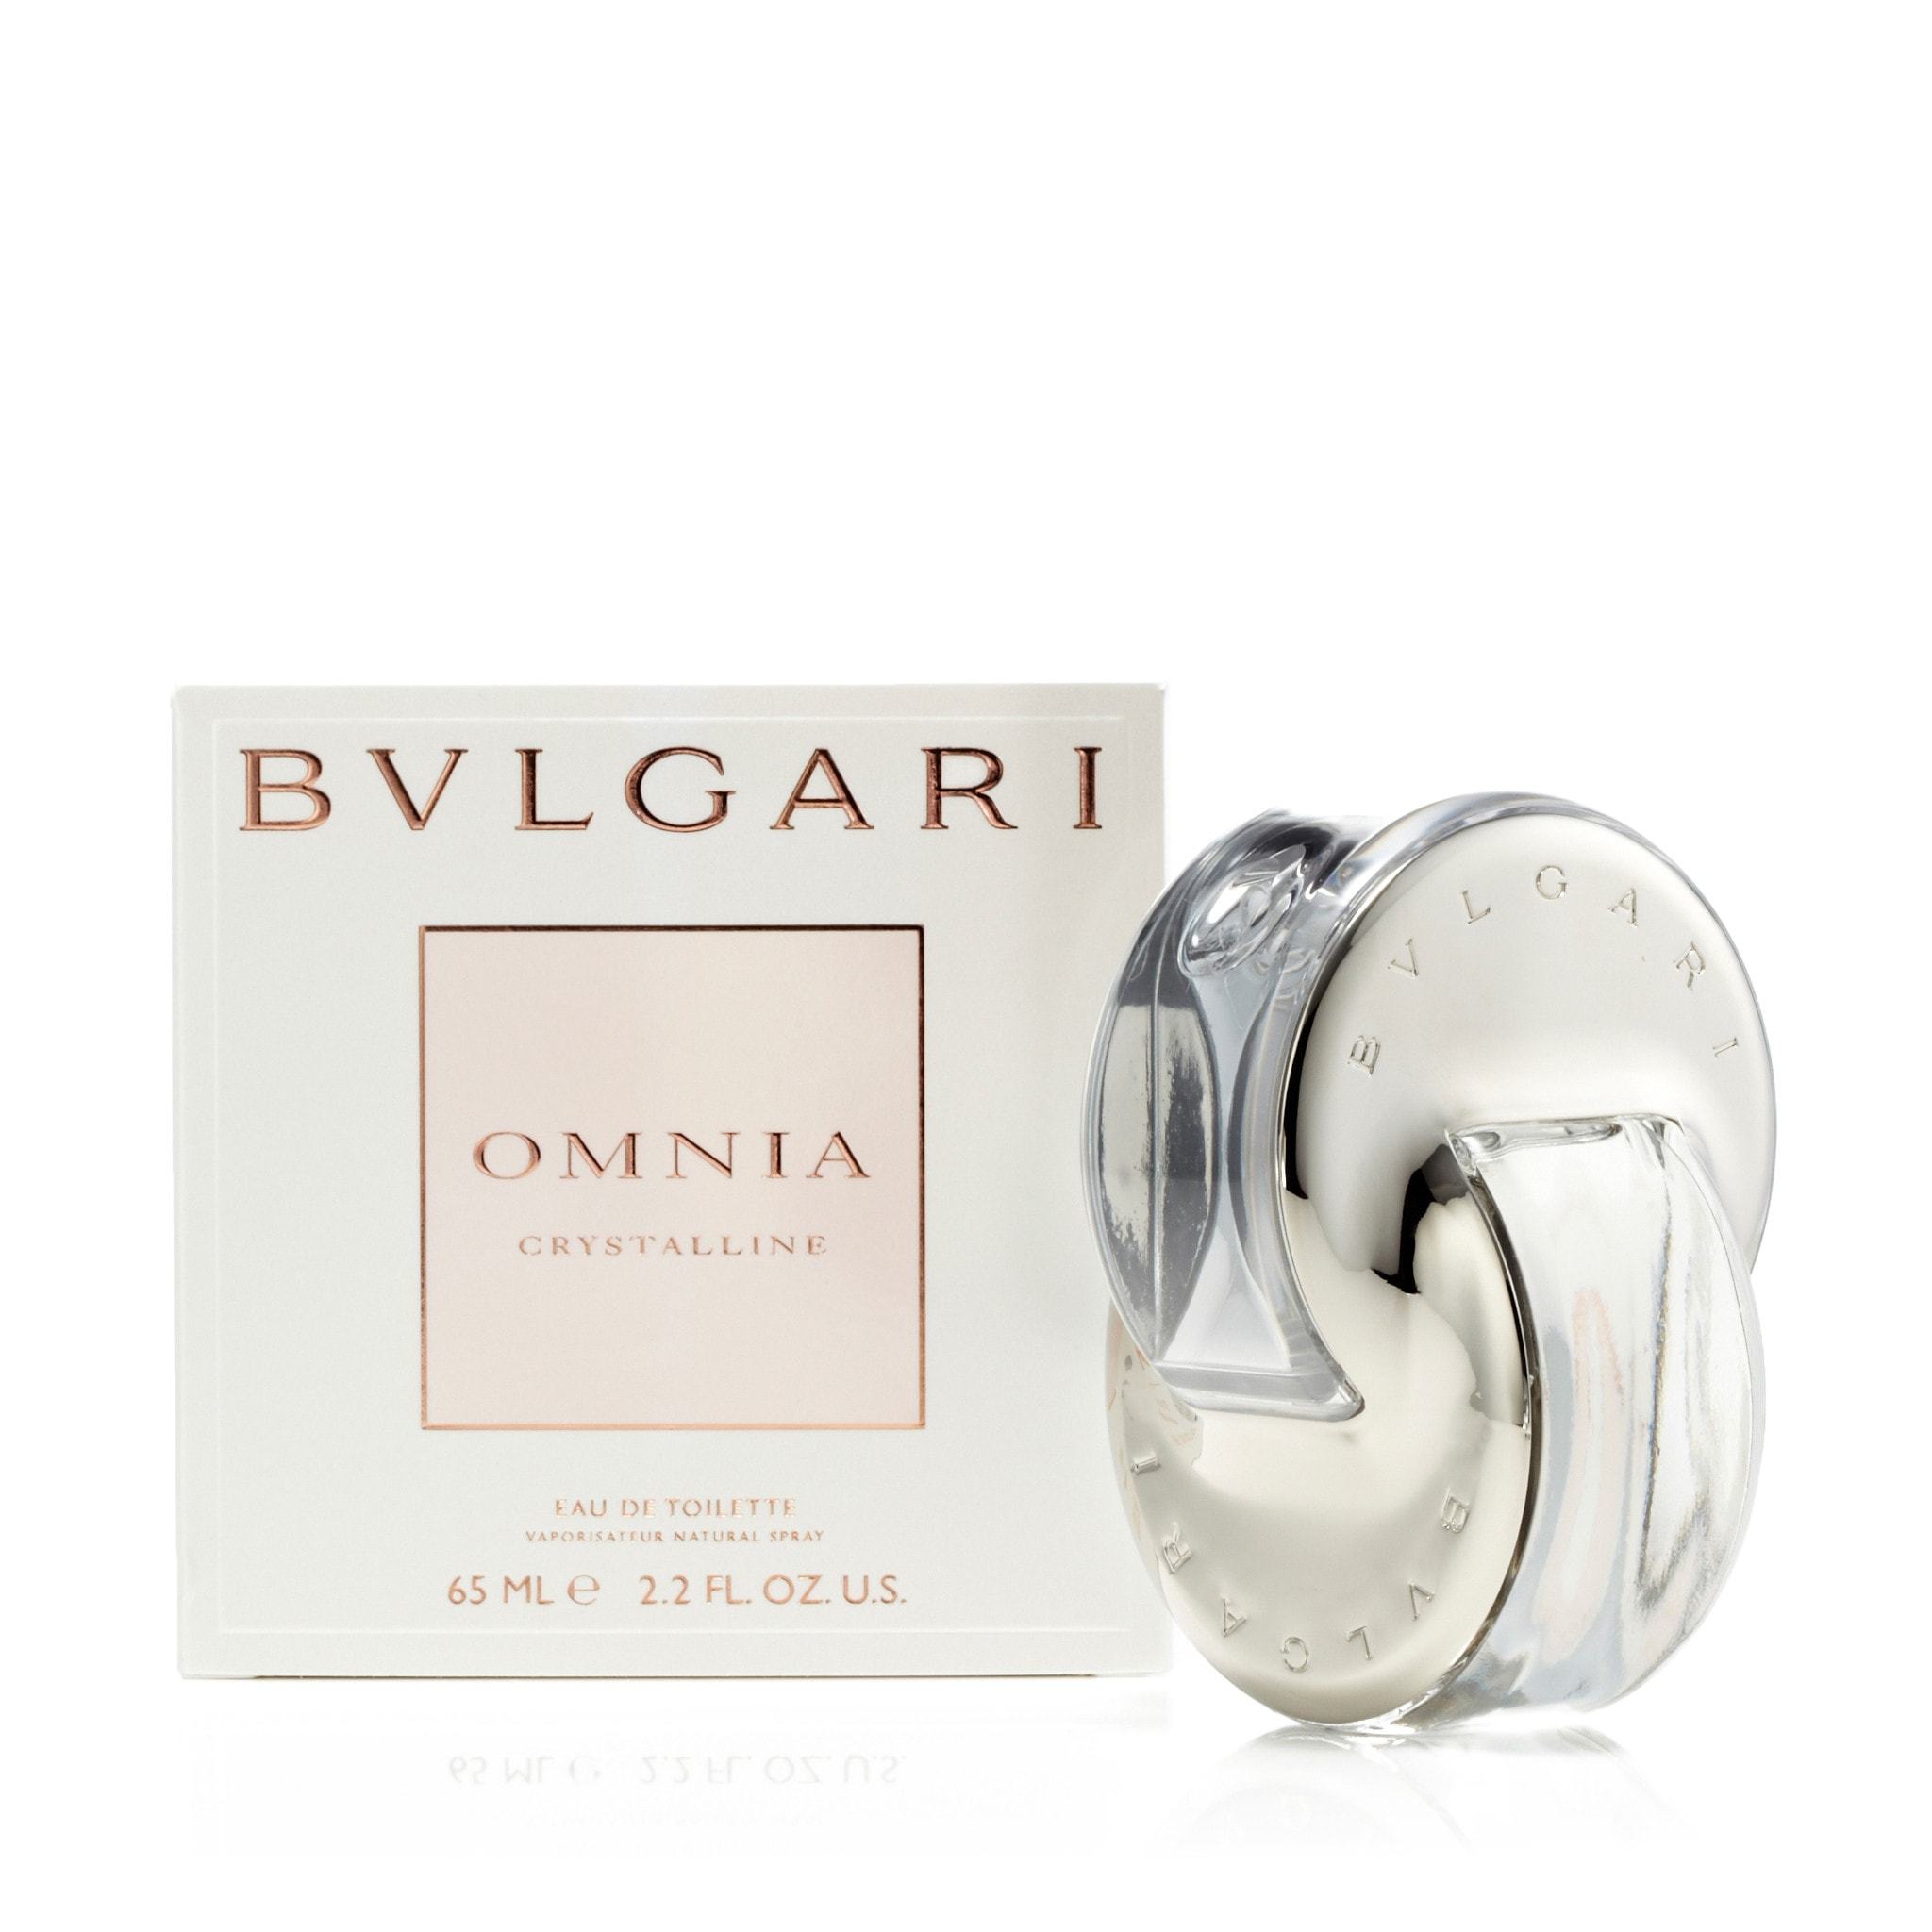 bvlgari omnia crystalline eau de parfum 65ml